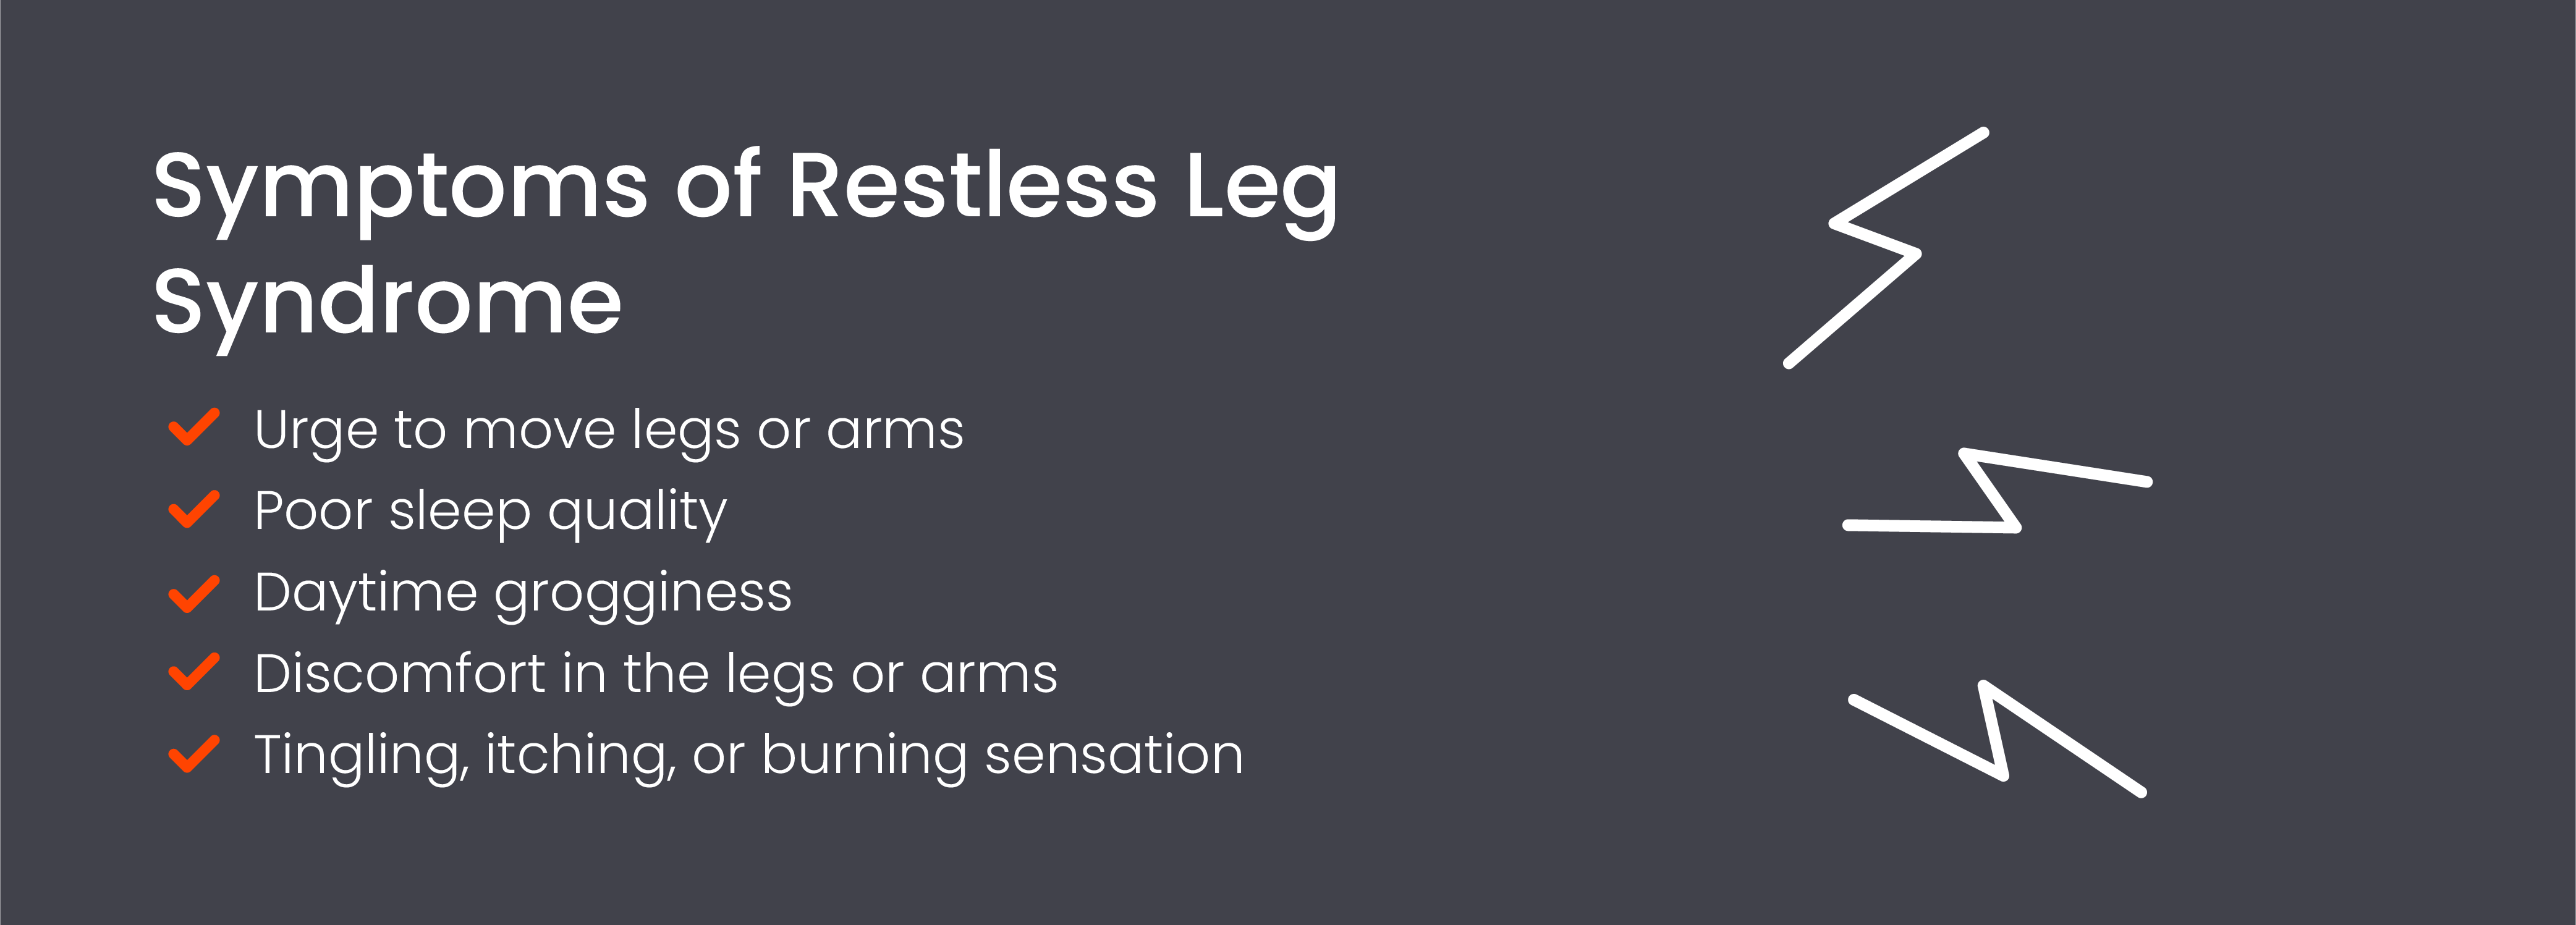 Symptoms of restless leg syndrome